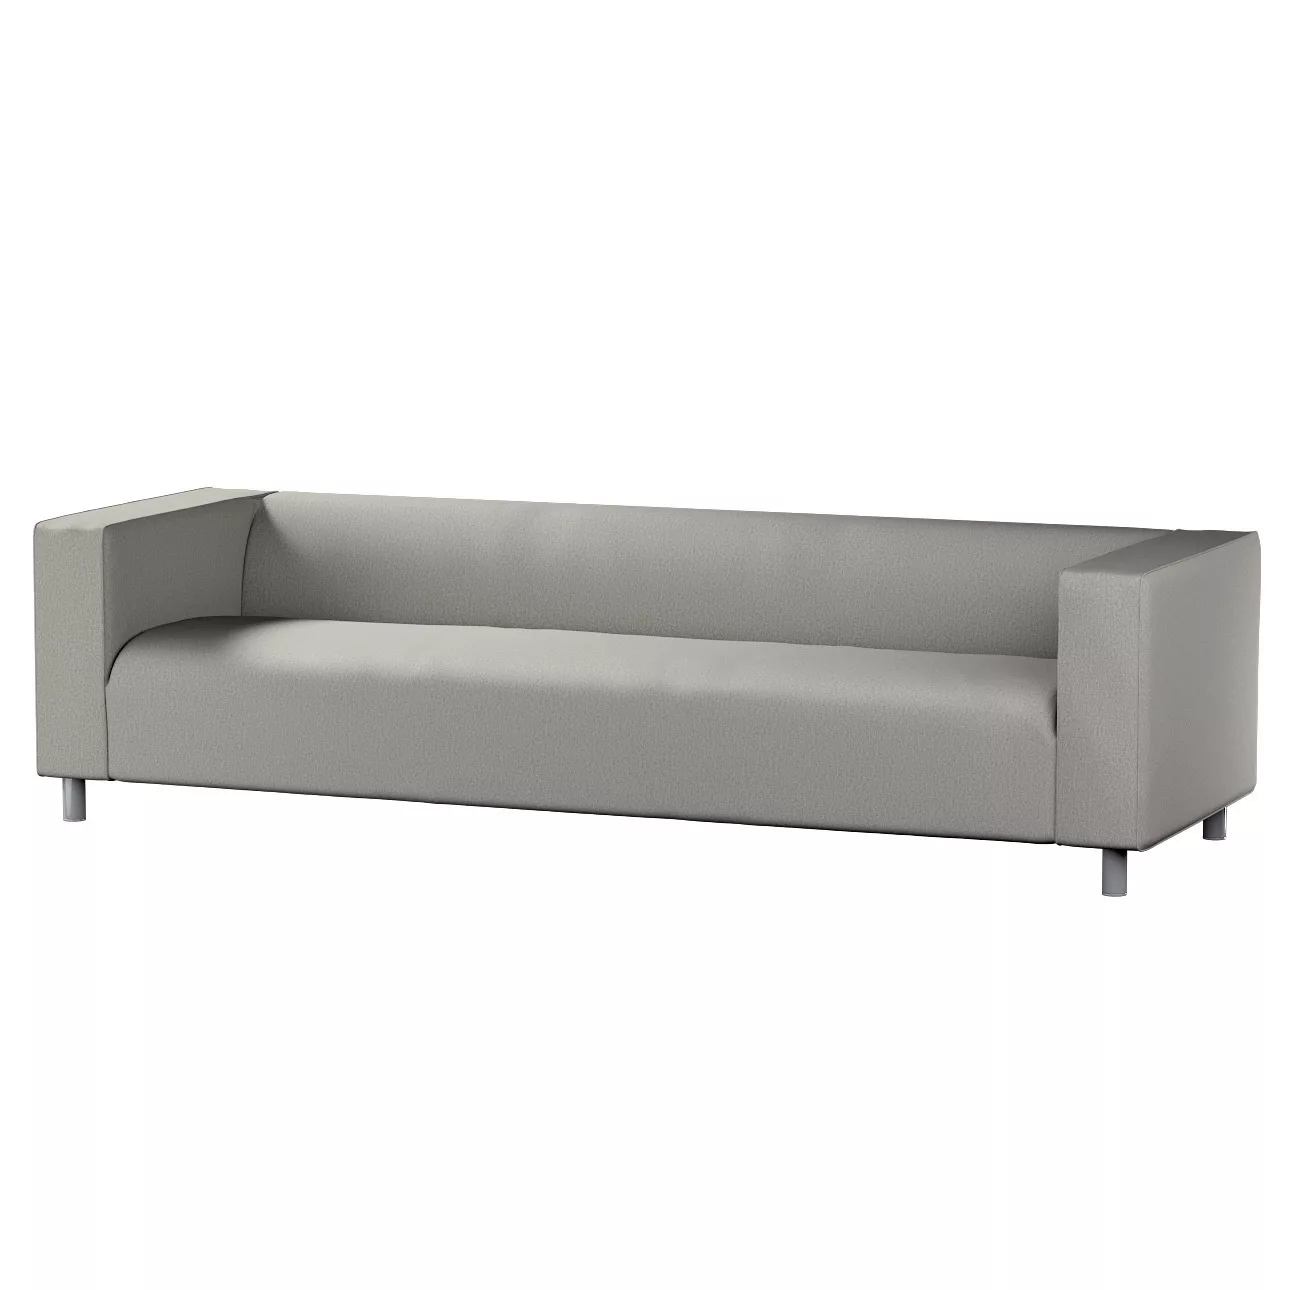 Bezug für Klippan 4-Sitzer Sofa, grau-beige, Bezug für Klippan 4-Sitzer, Ma günstig online kaufen